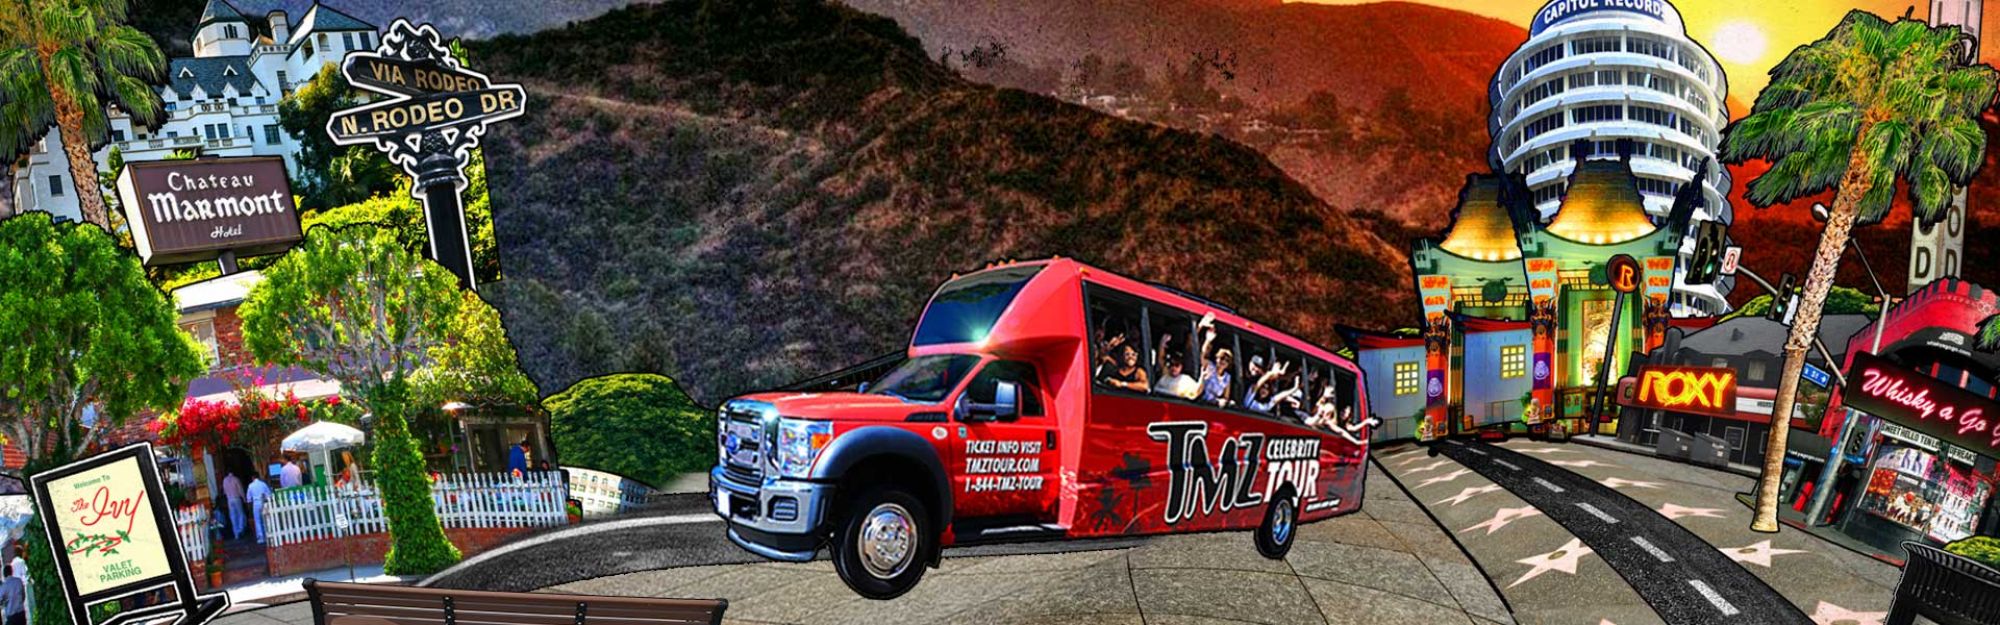 tmz tour bus california